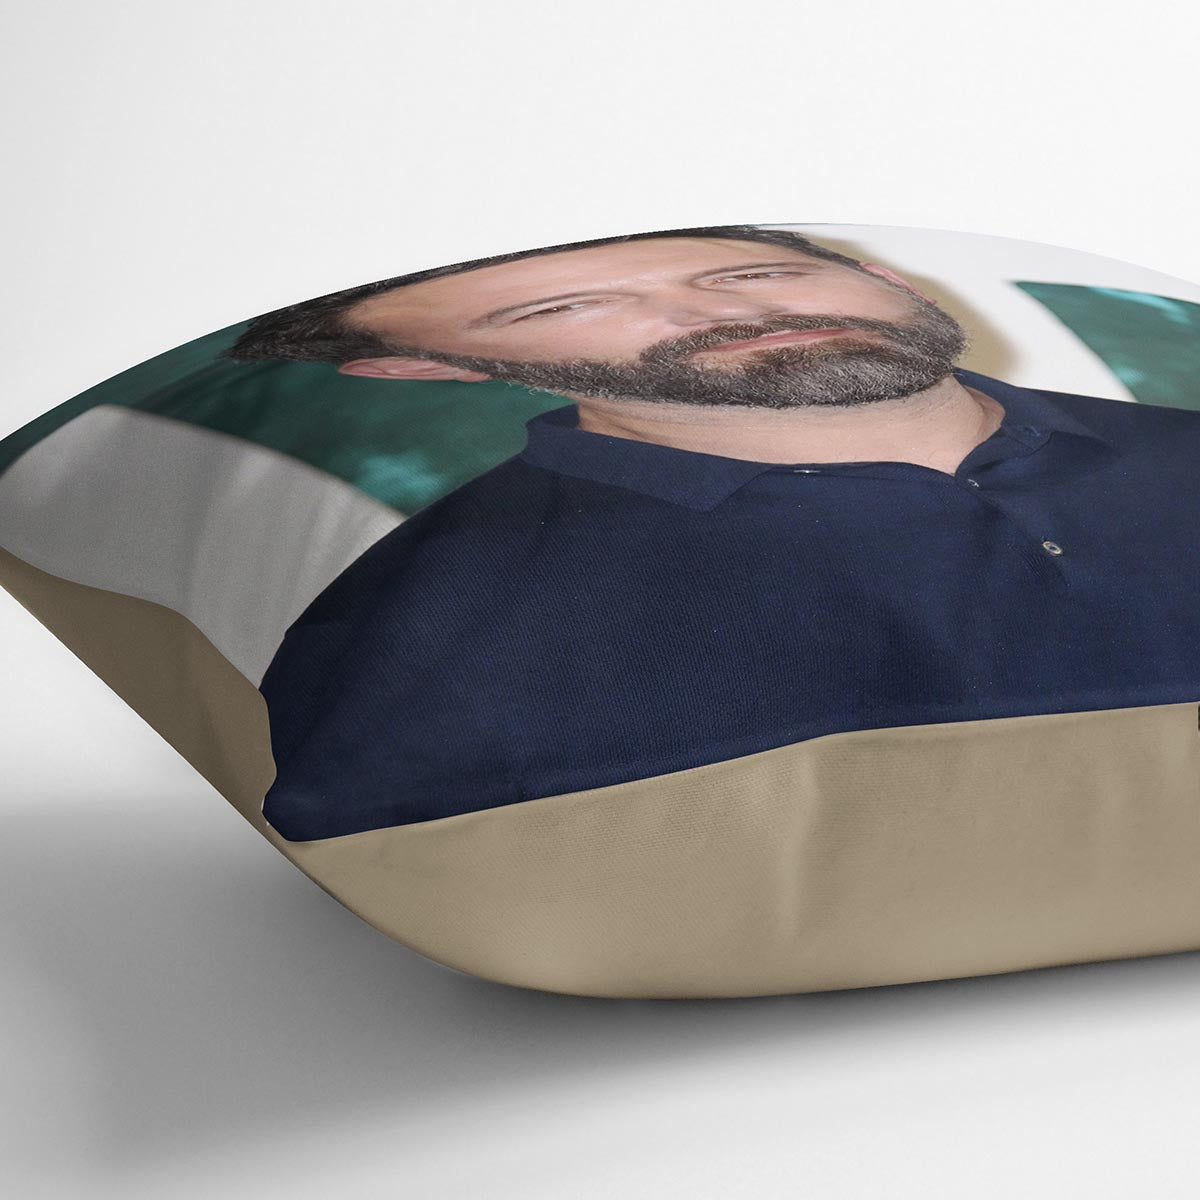 Ben Affleck Cushion